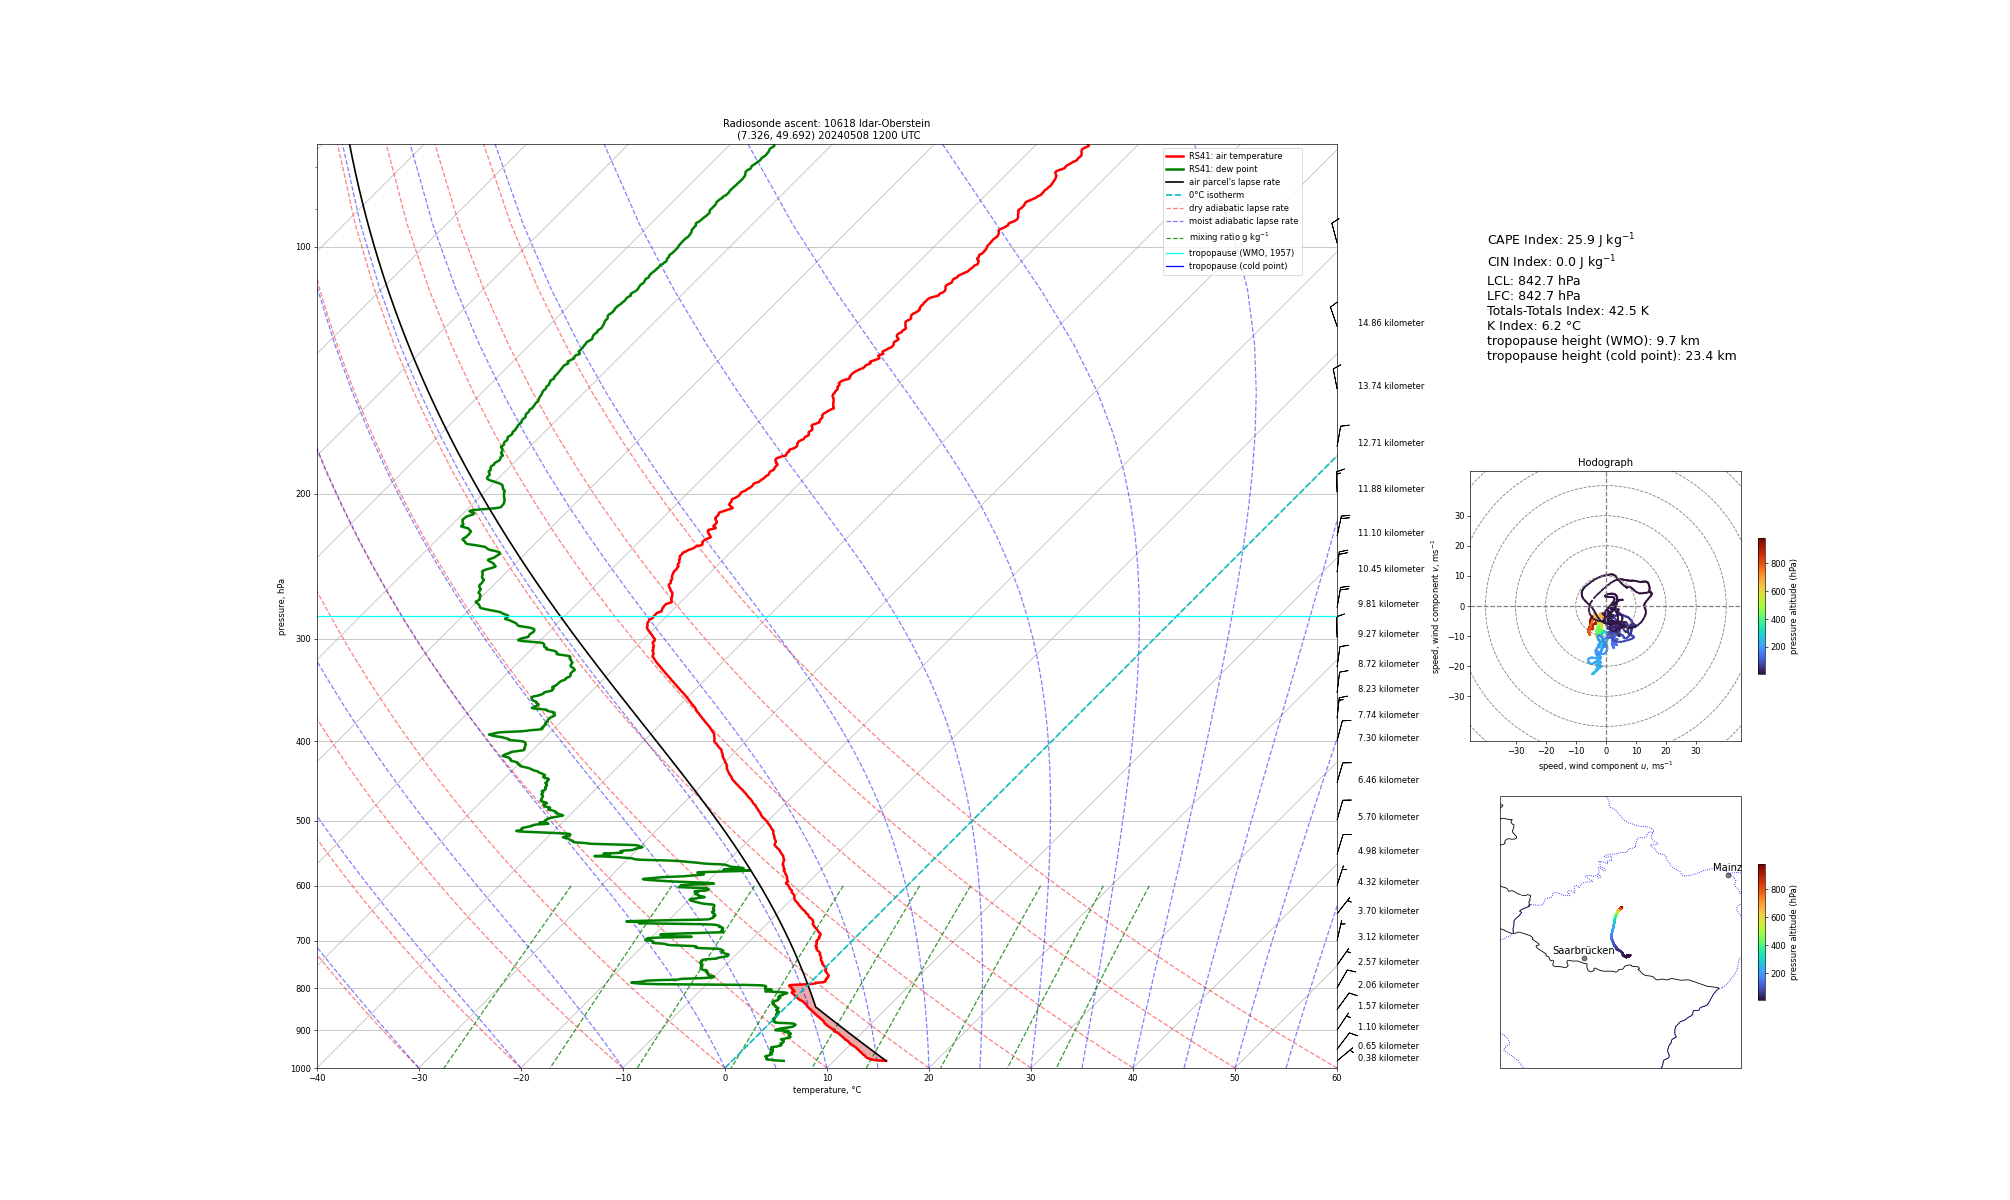 Visualisation of the radiosounding profile at Idar-Oberstein at 1200 UTC